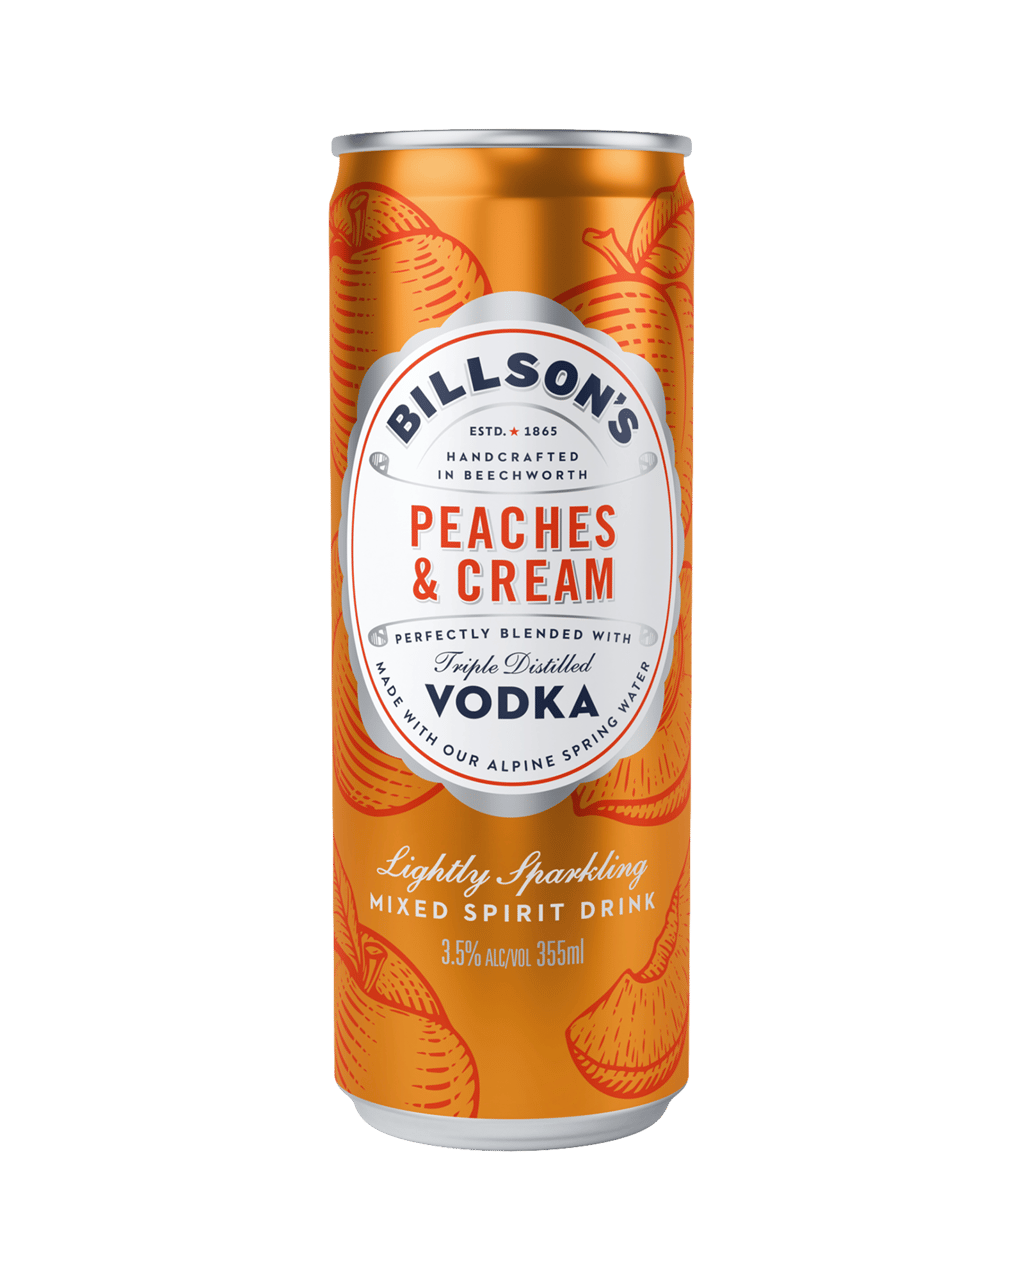 Image - Vodka Peaches & Cream by Billson's